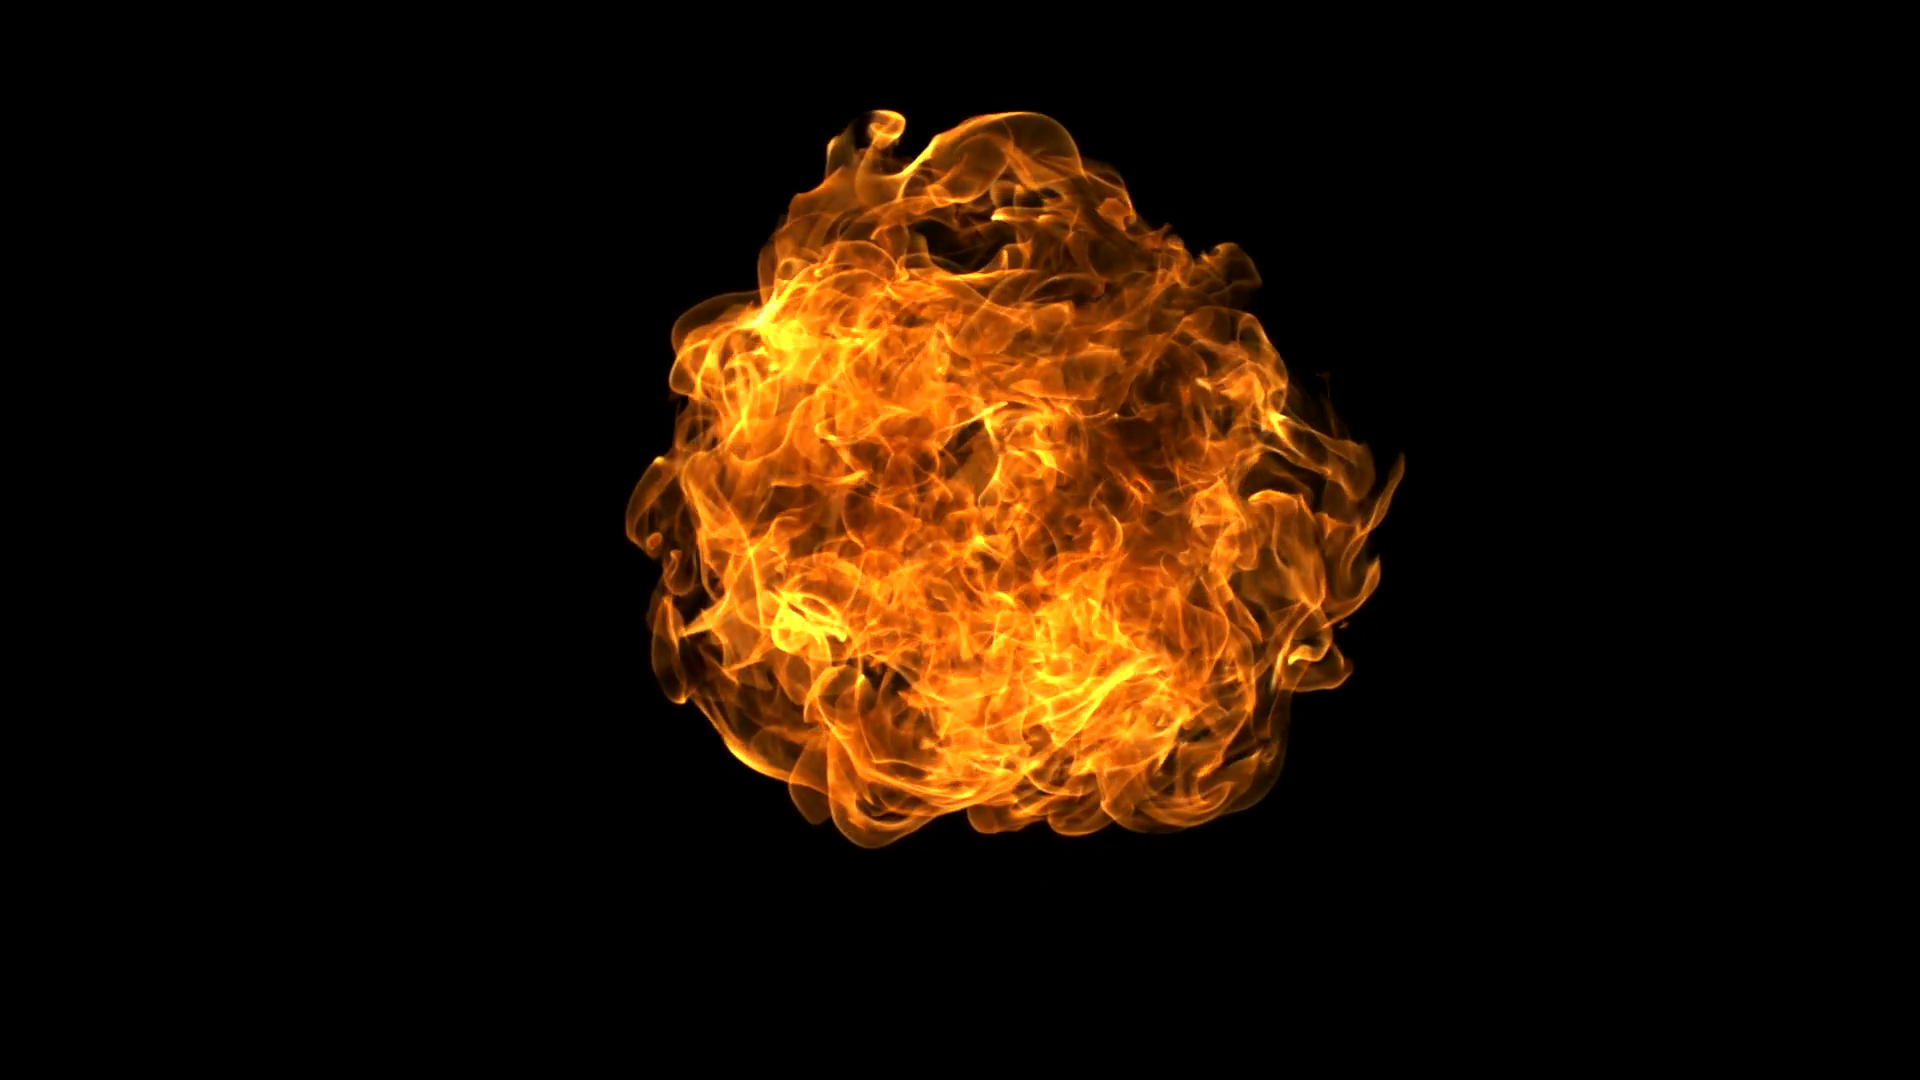 Fire ball explosion, Slow Motion Stock Video Footage - Videoblocks